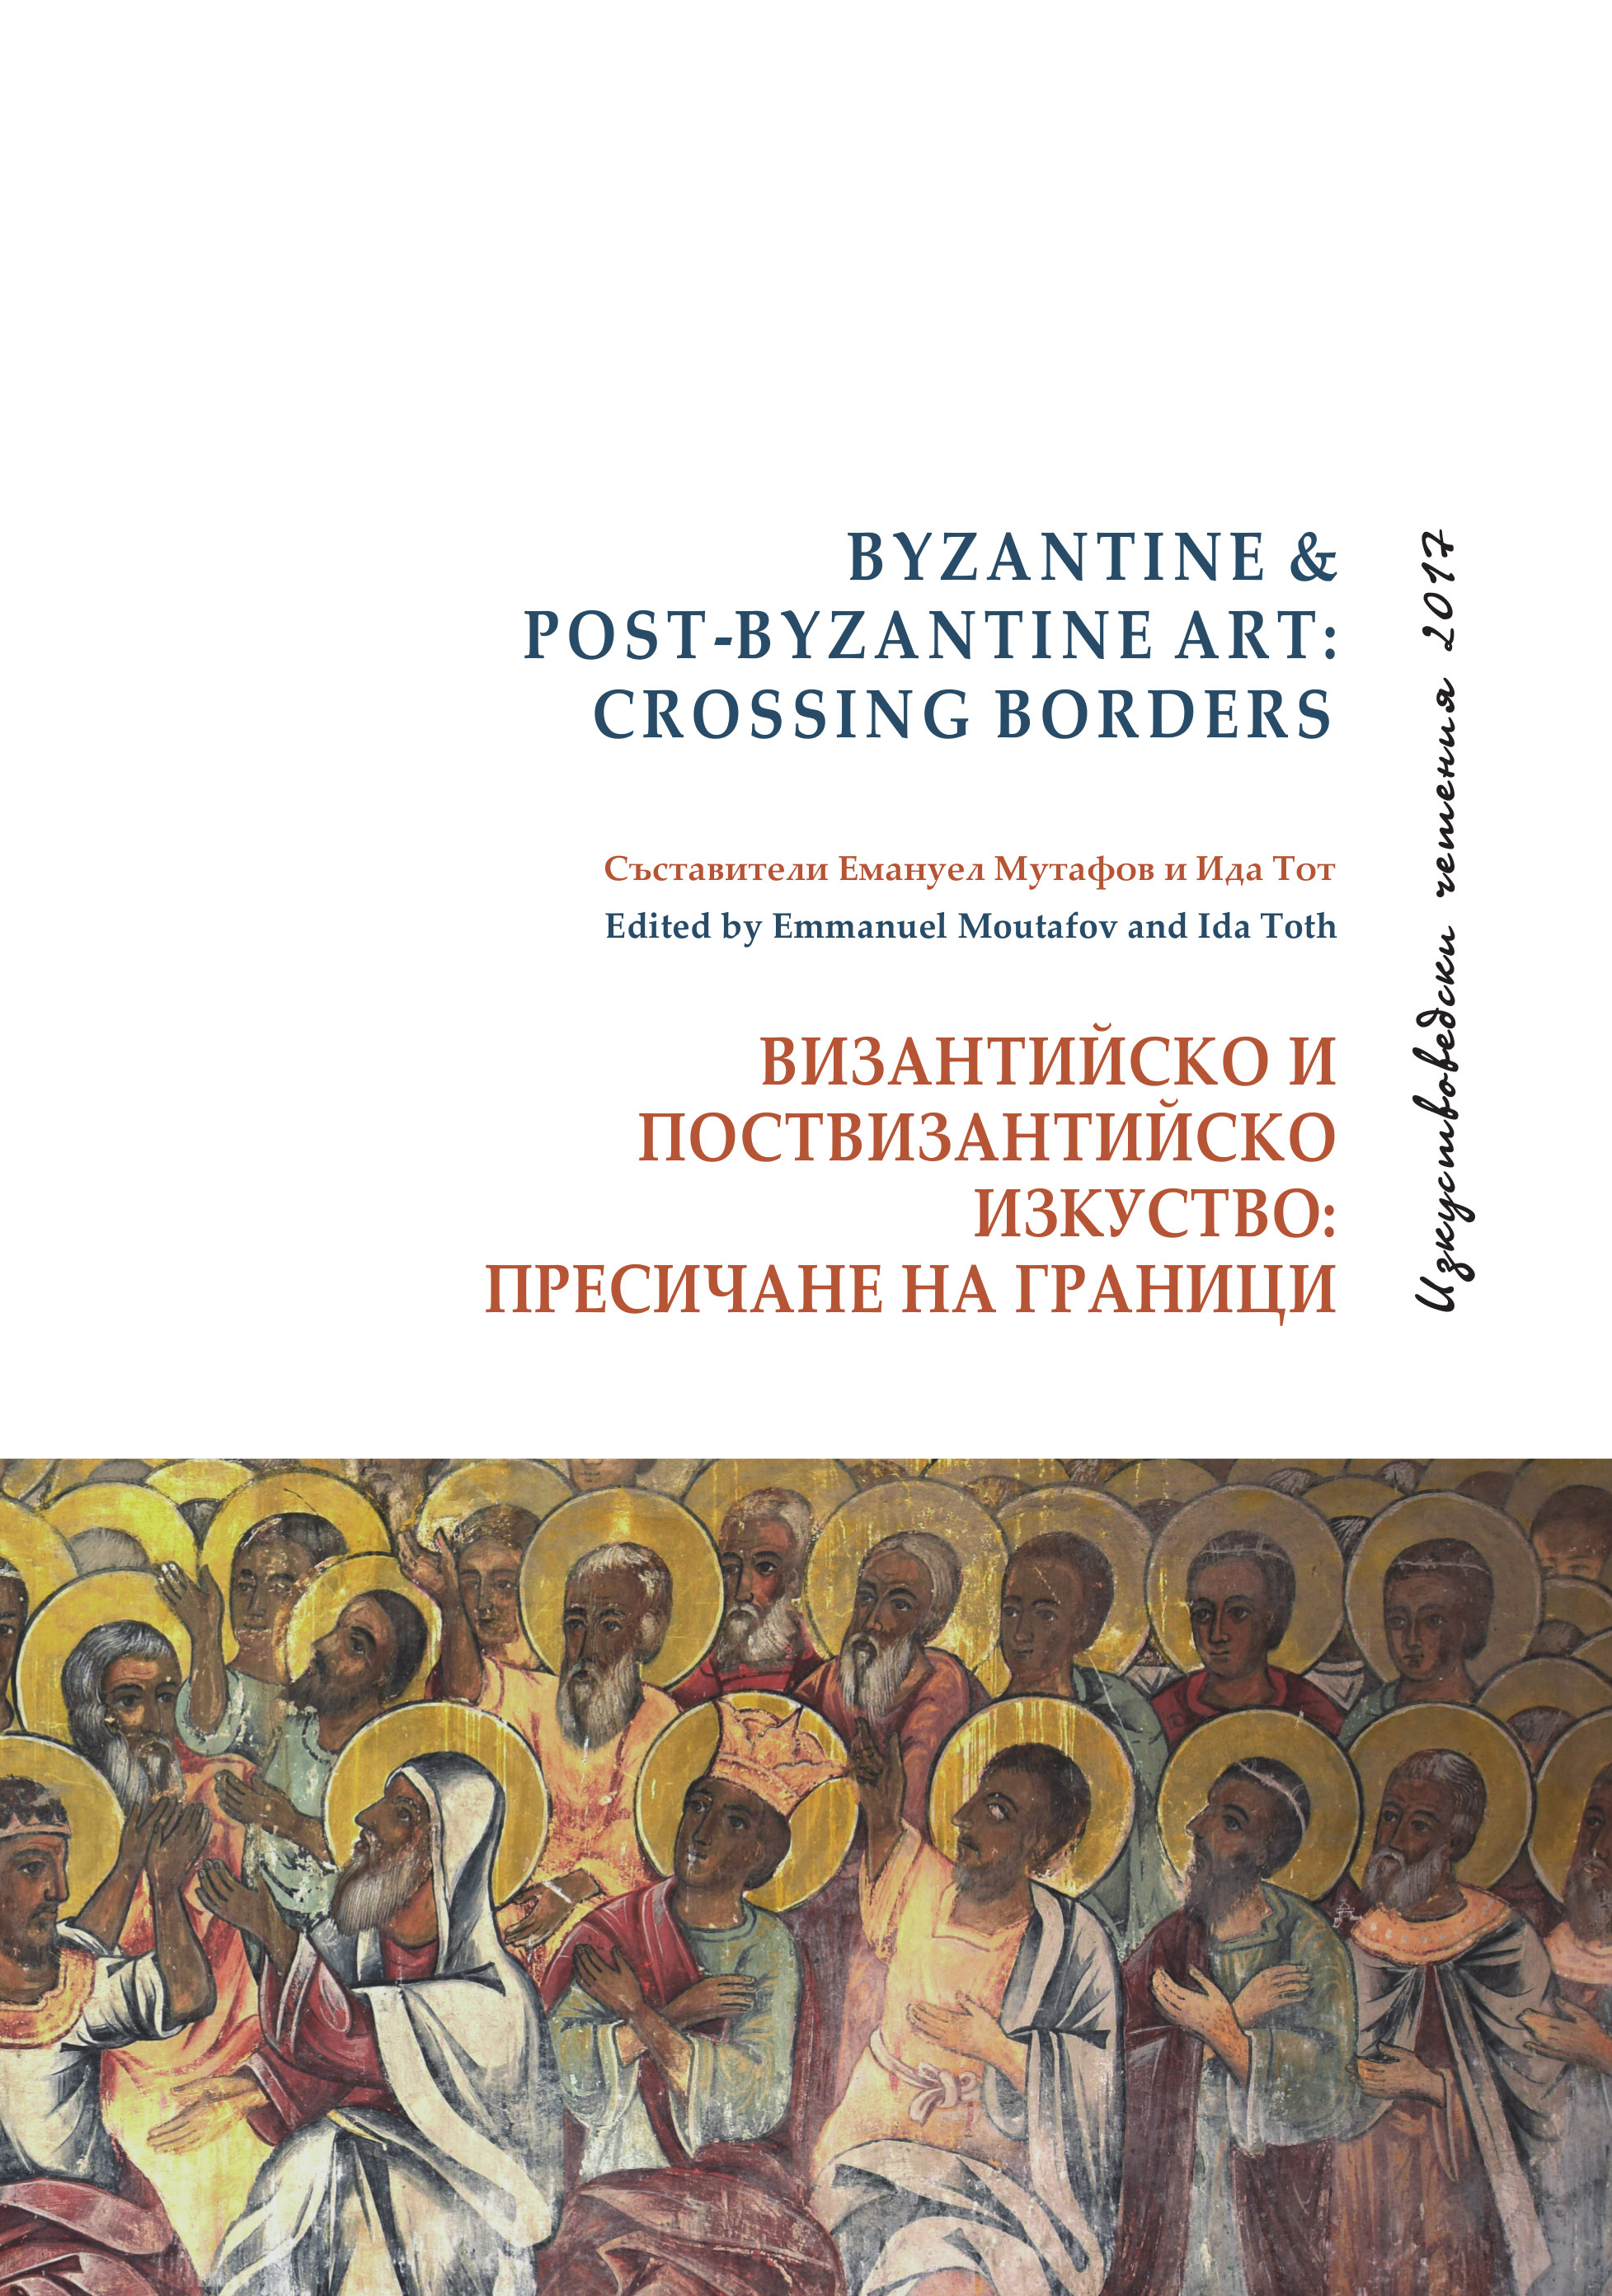 Post-Byzantine Wall Paintings in Euboea: The Monastery of Panagia Peribleptos at Politika